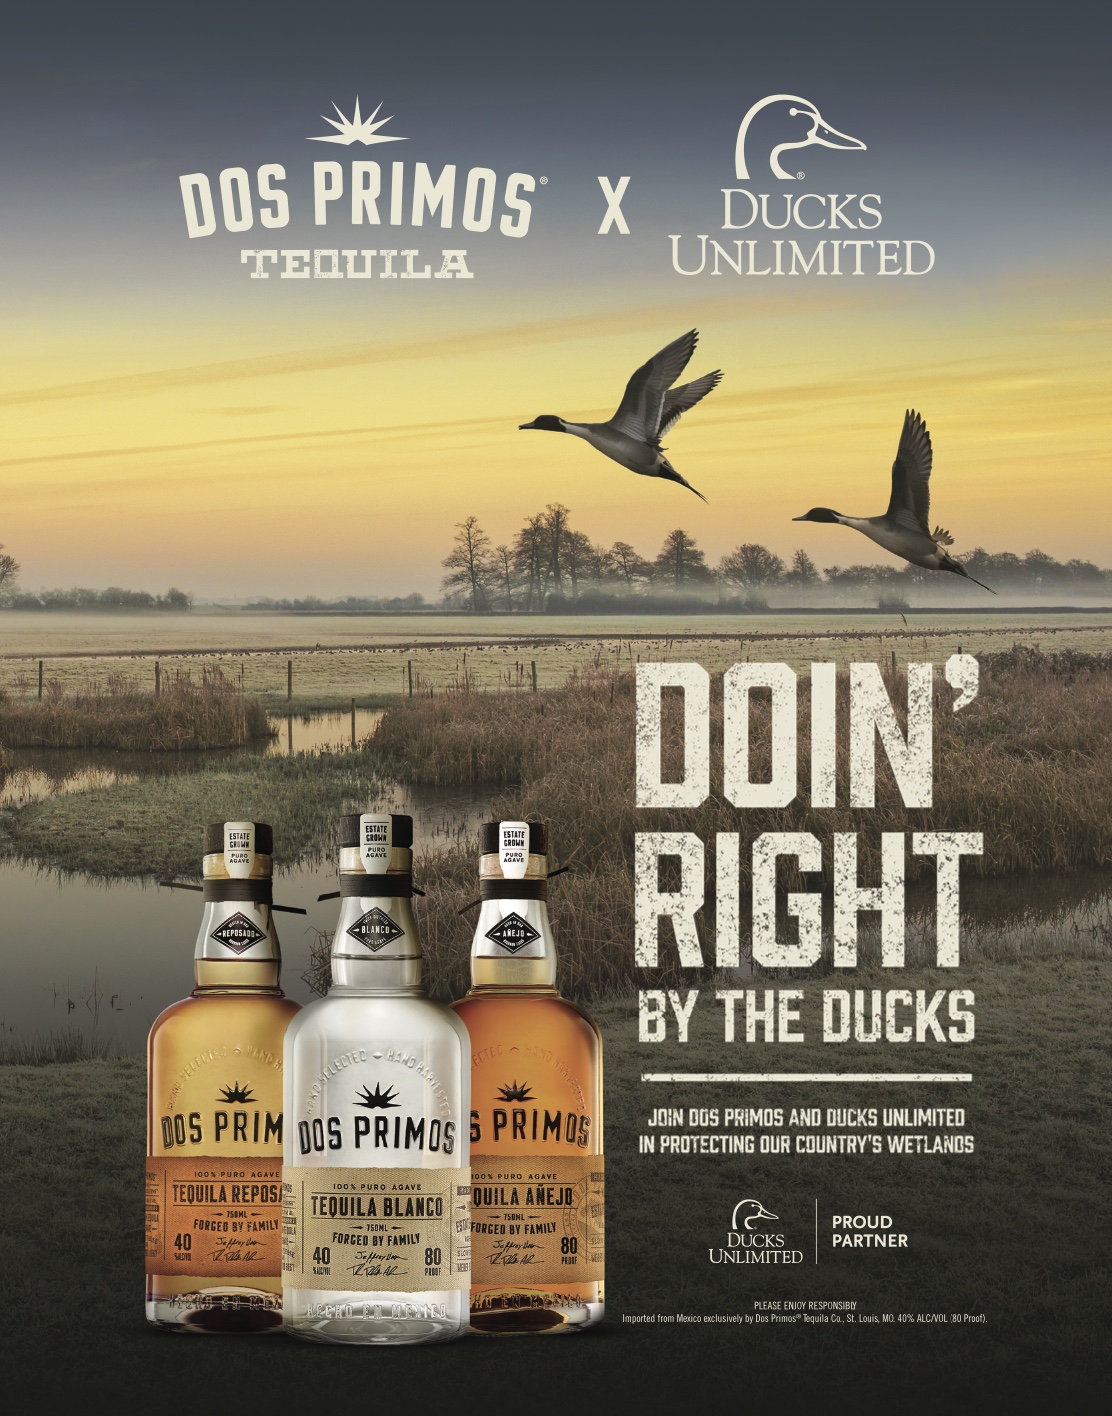 Dos Primos Ducks Unlimited photo